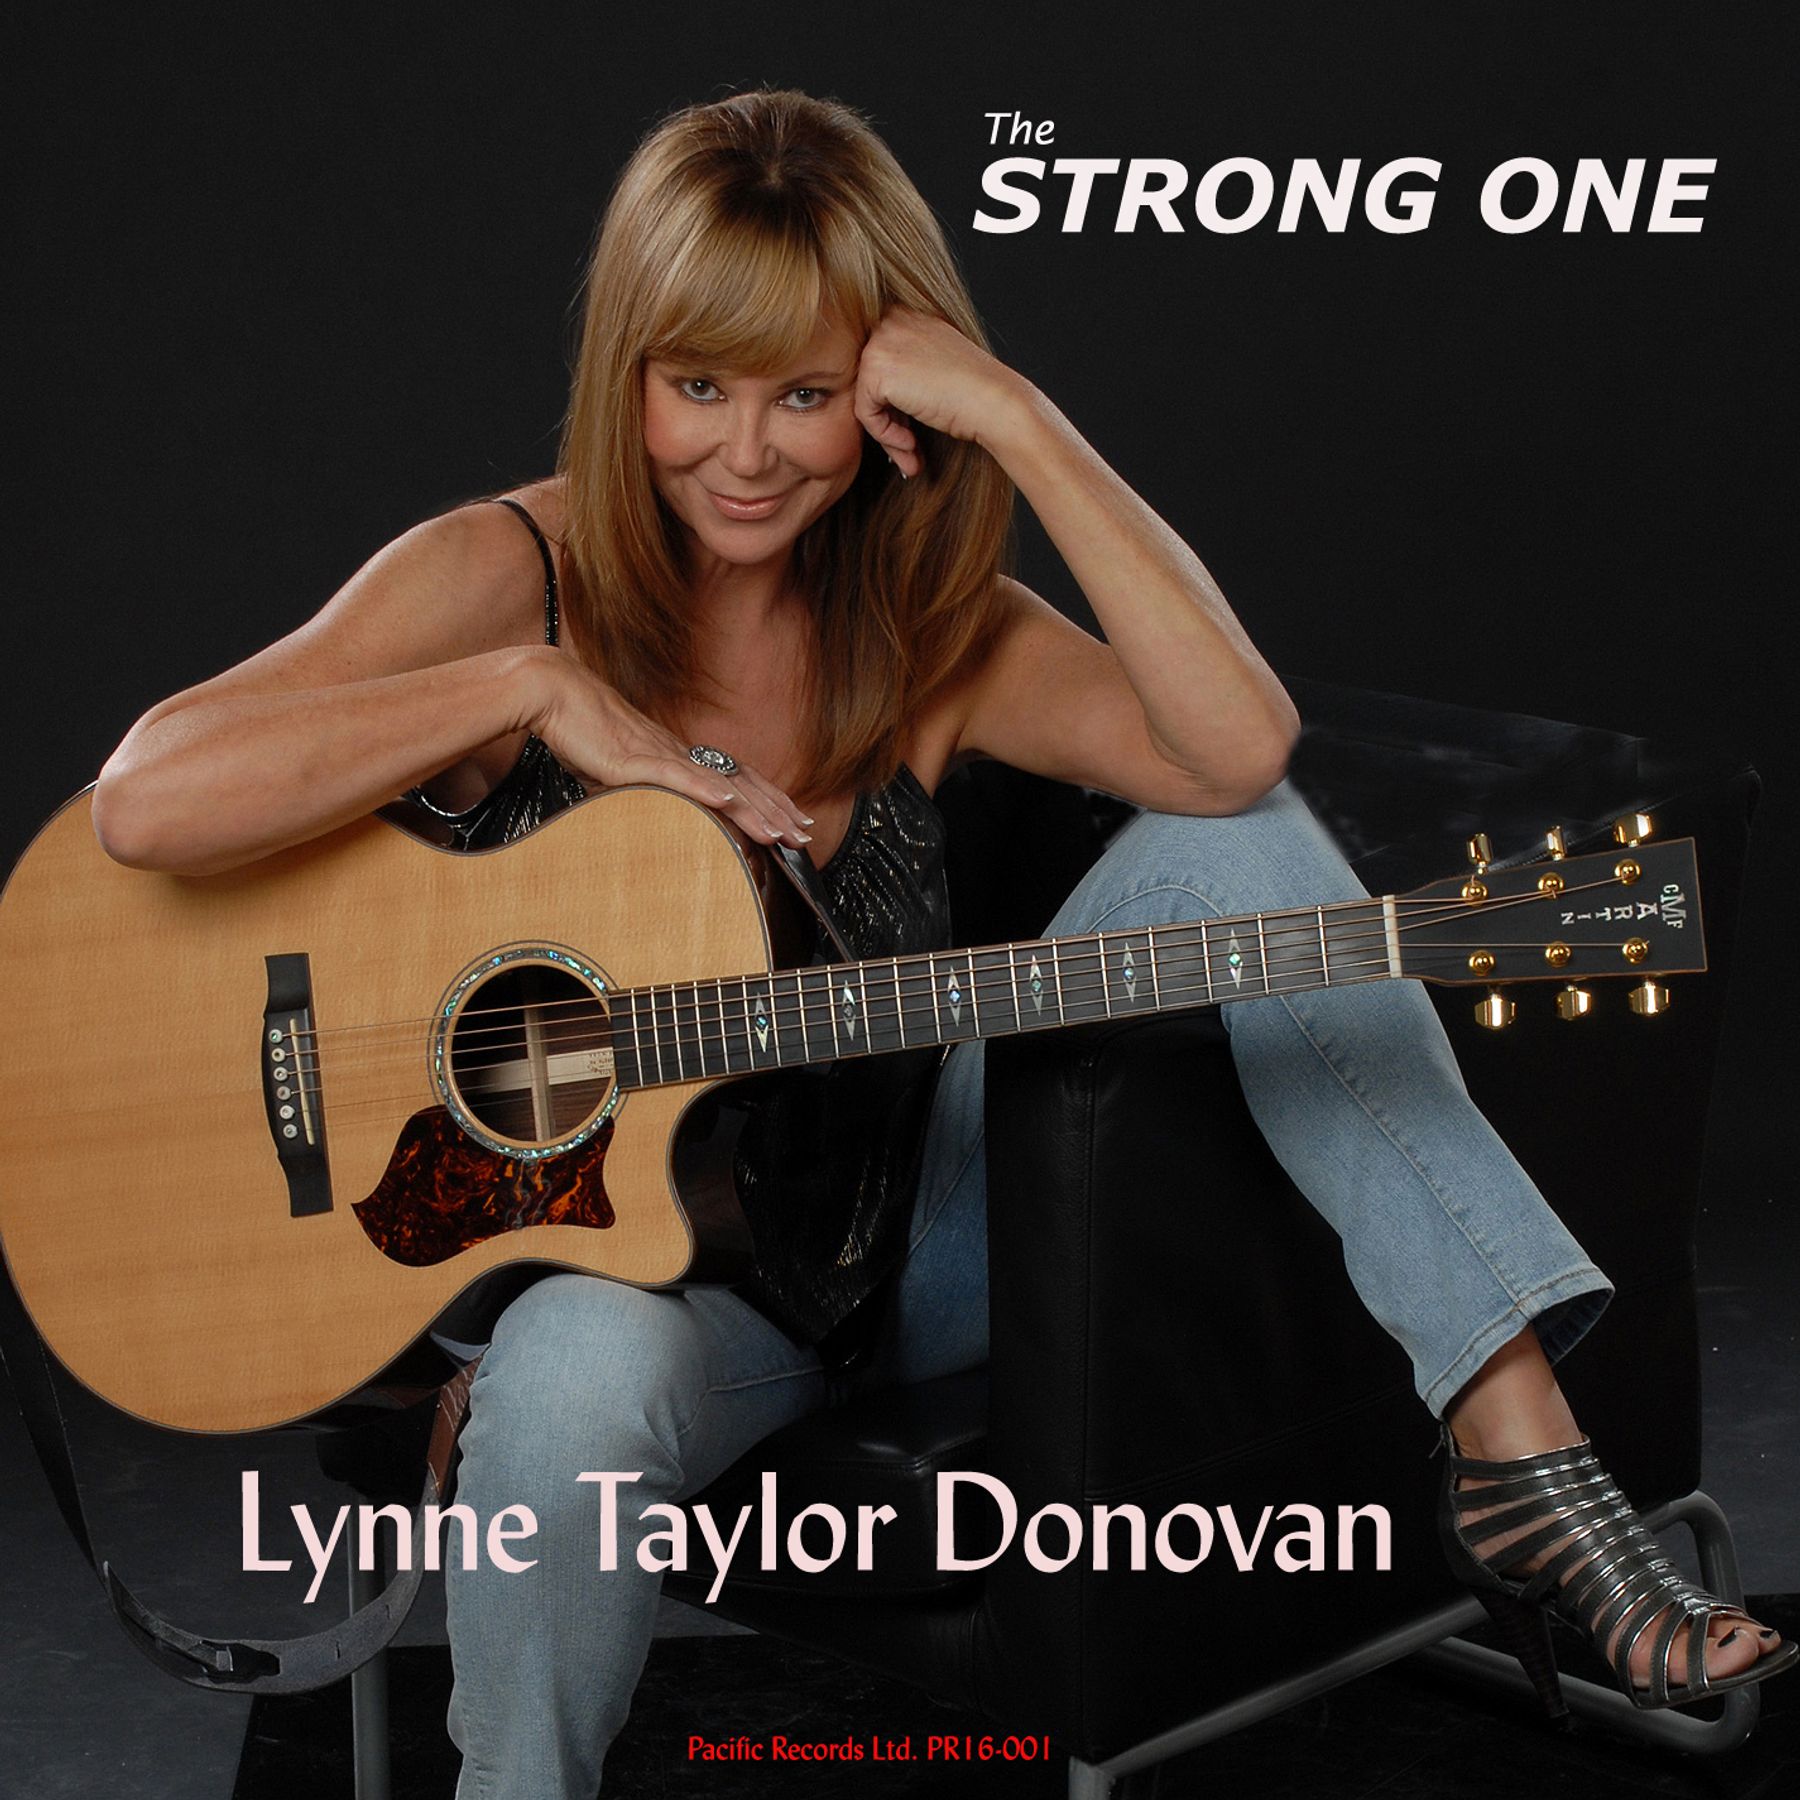 Lynne Taylor Donovan